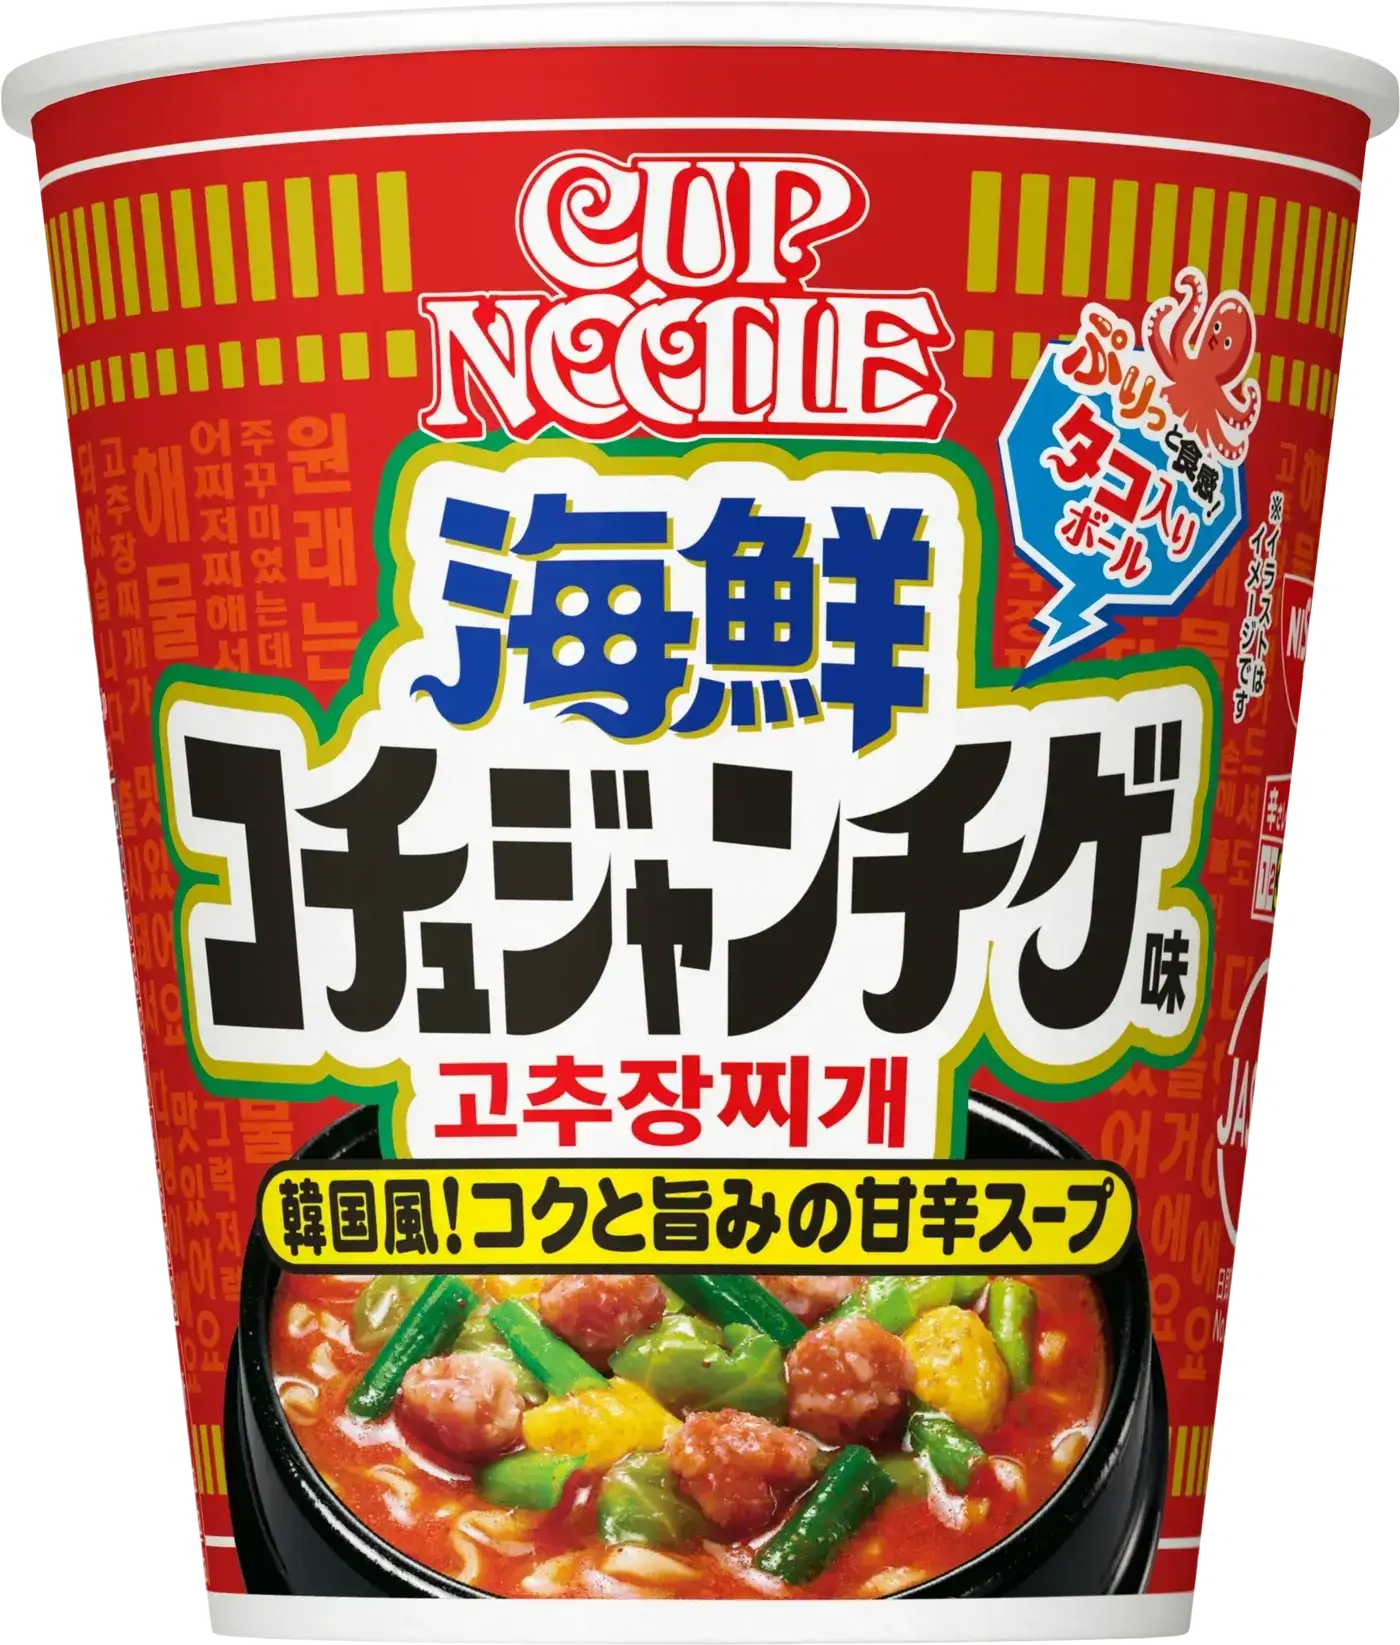 Nissin - Cup Noodles Seafood Gochujang Stew Flavor